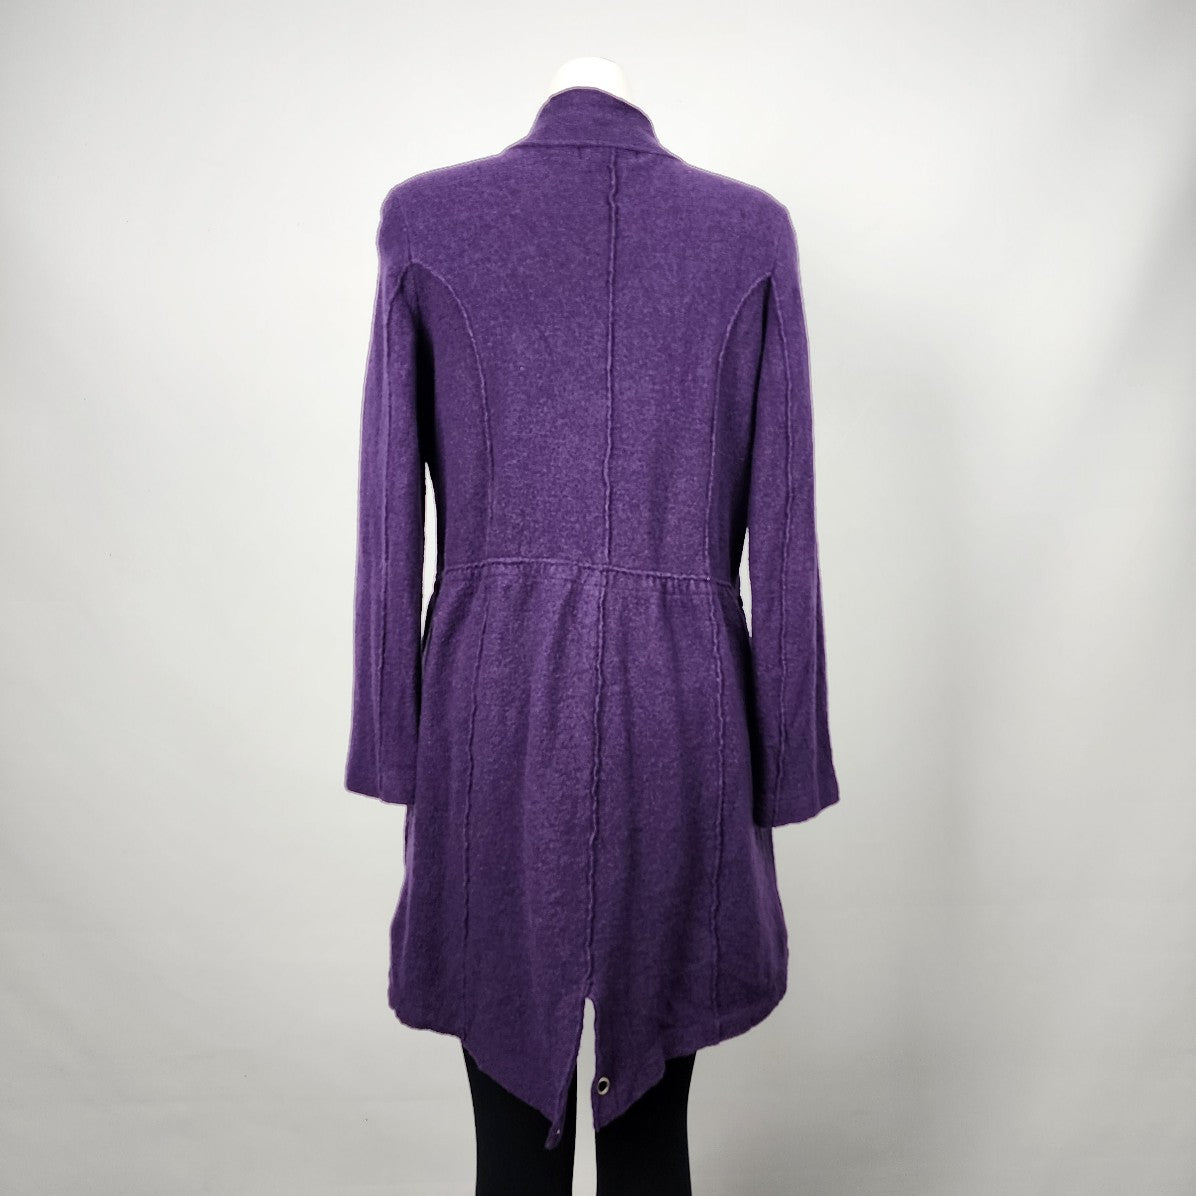 Eric Alexandre Purple Boiled Wool Zip Up Jacket Size L